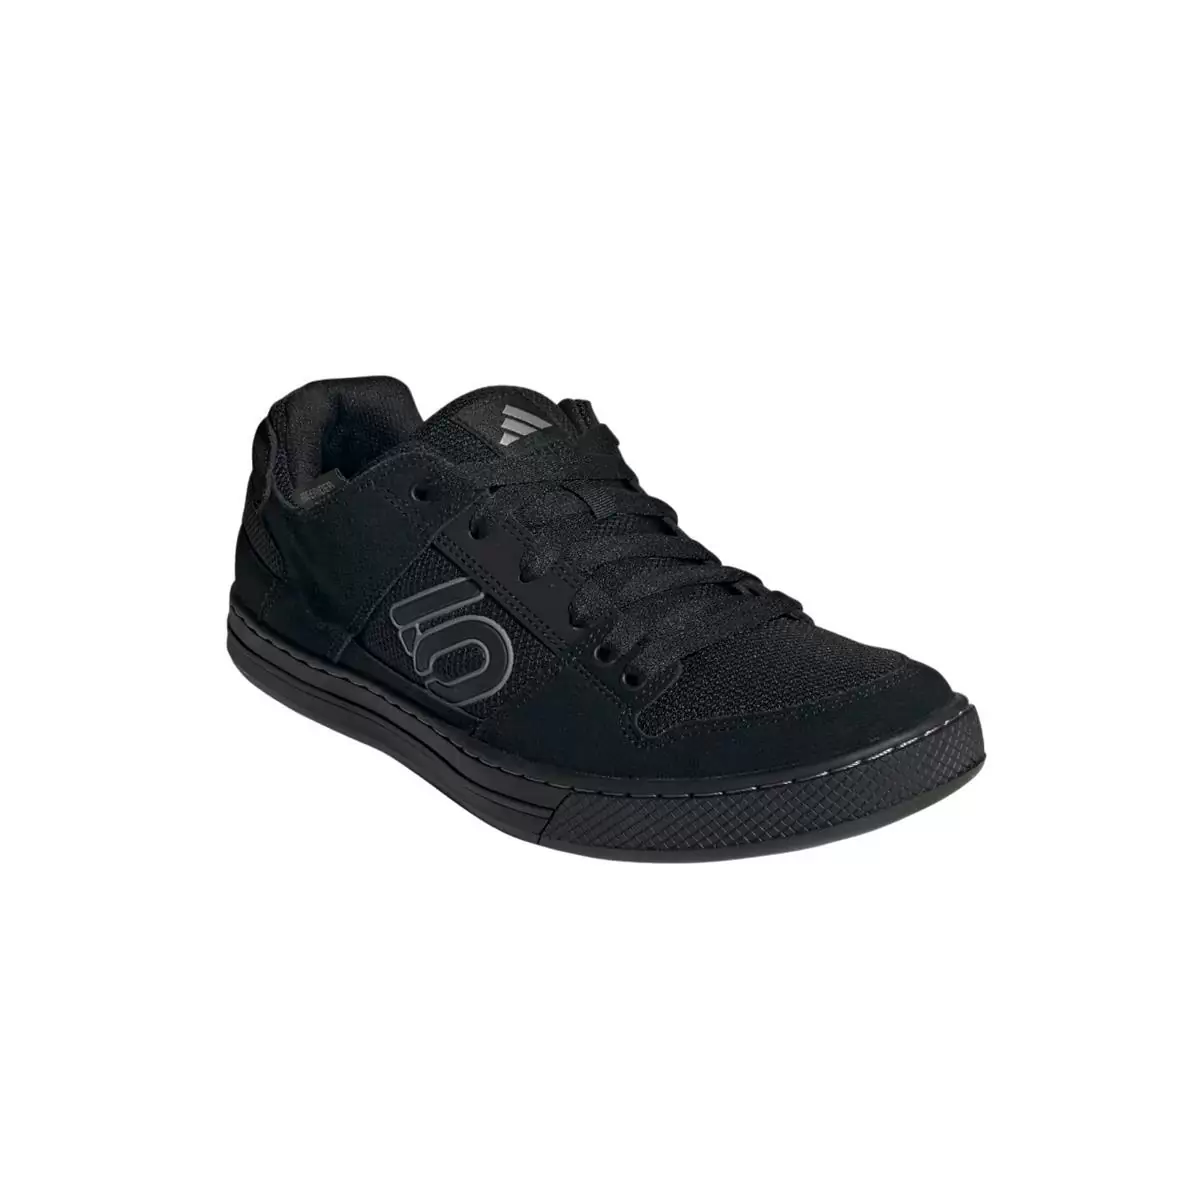 MTB Shoes Flat Freerider Black Size 43 #4